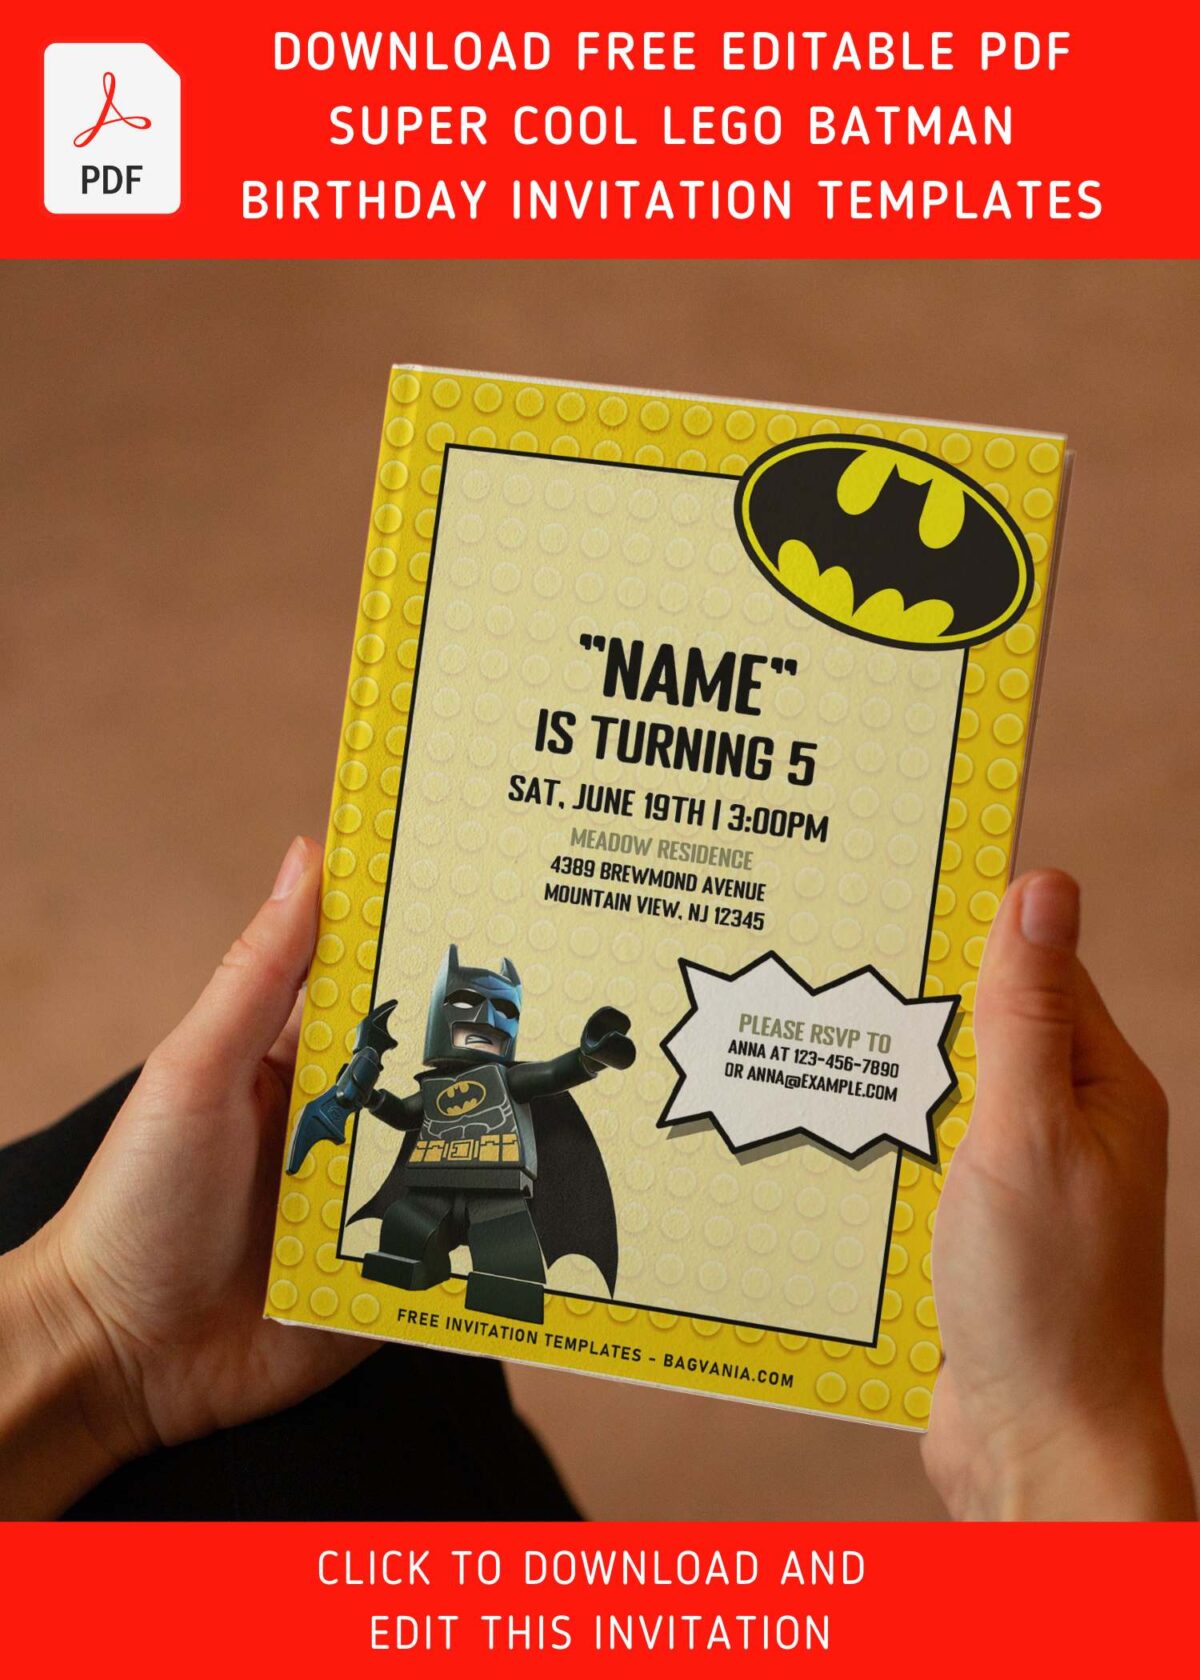 (Free Editable PDF) Super Cool Lego Batman Birthday Invitation Templates with adorable script